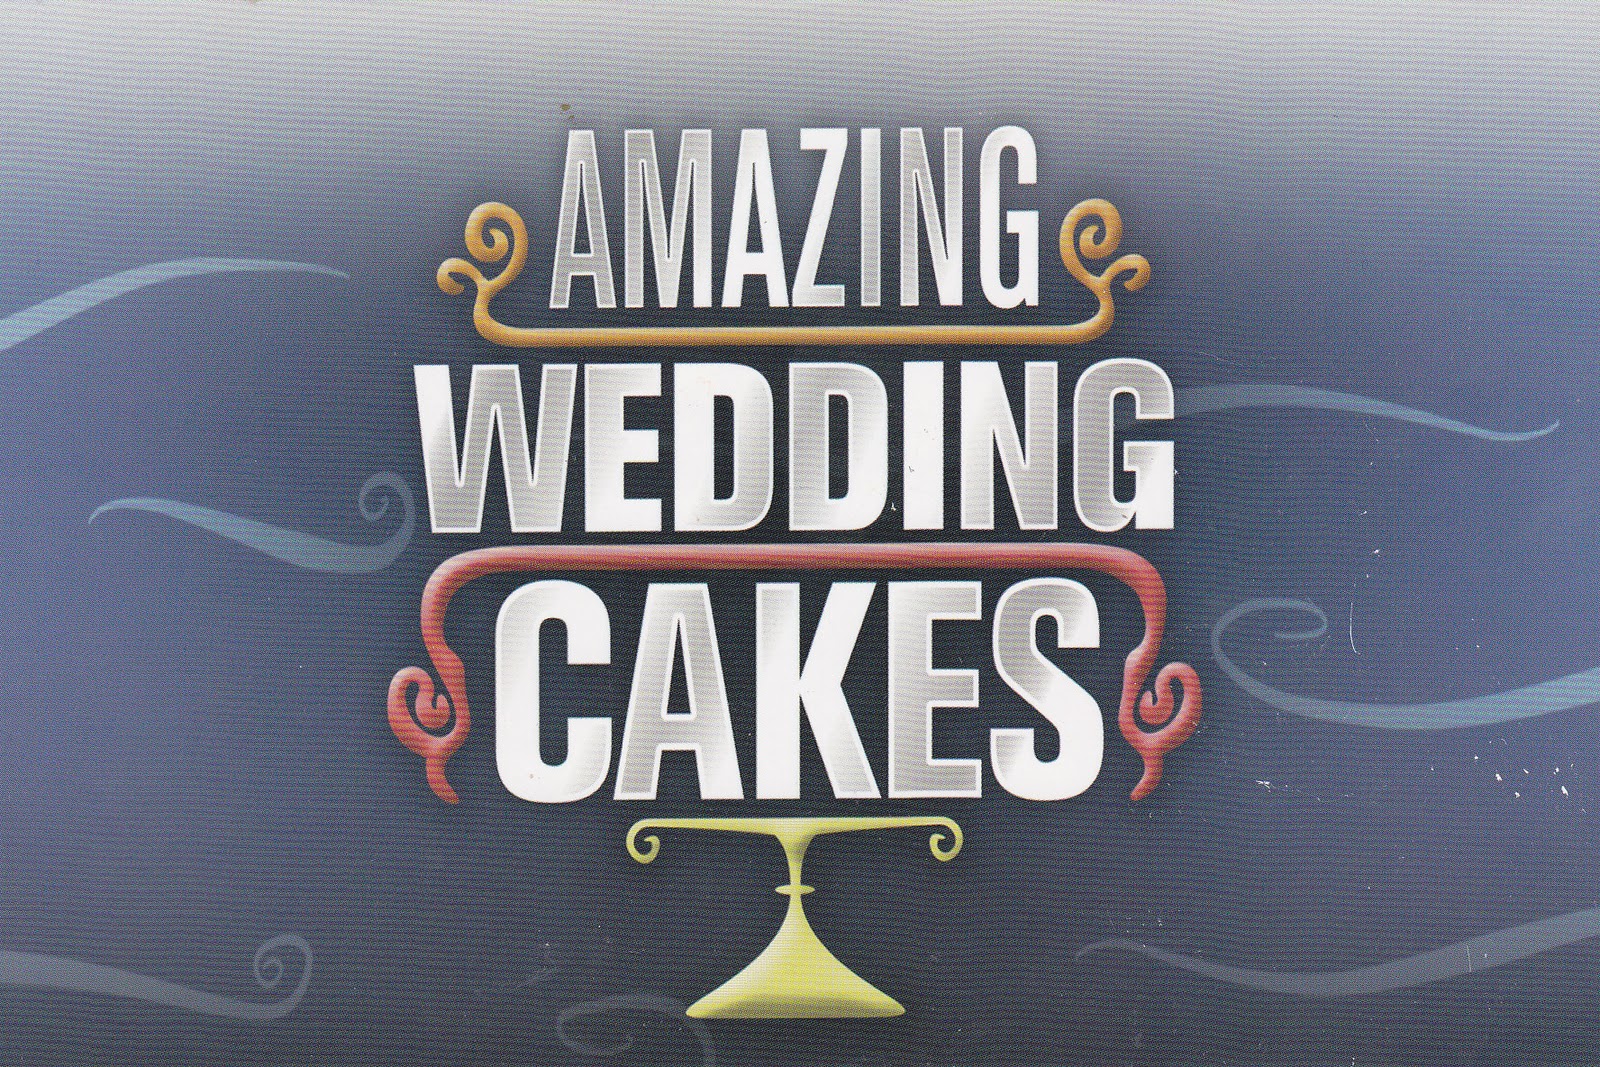 From Amazing Wedding Cakes on